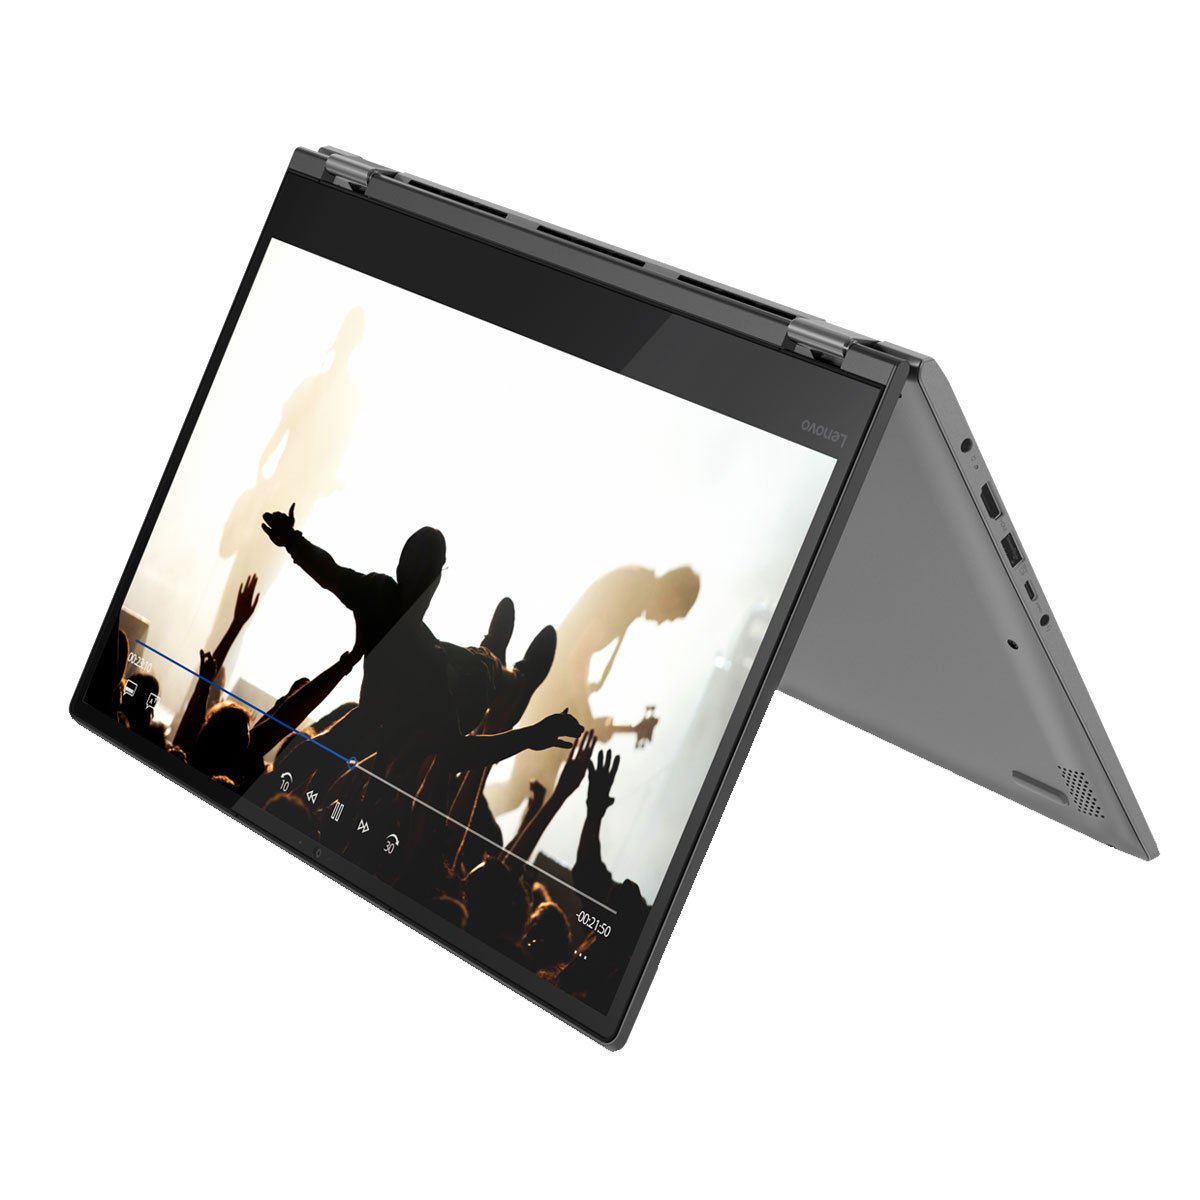 Laptop Yoga 530-14Arr 2 en 1 Lenovo